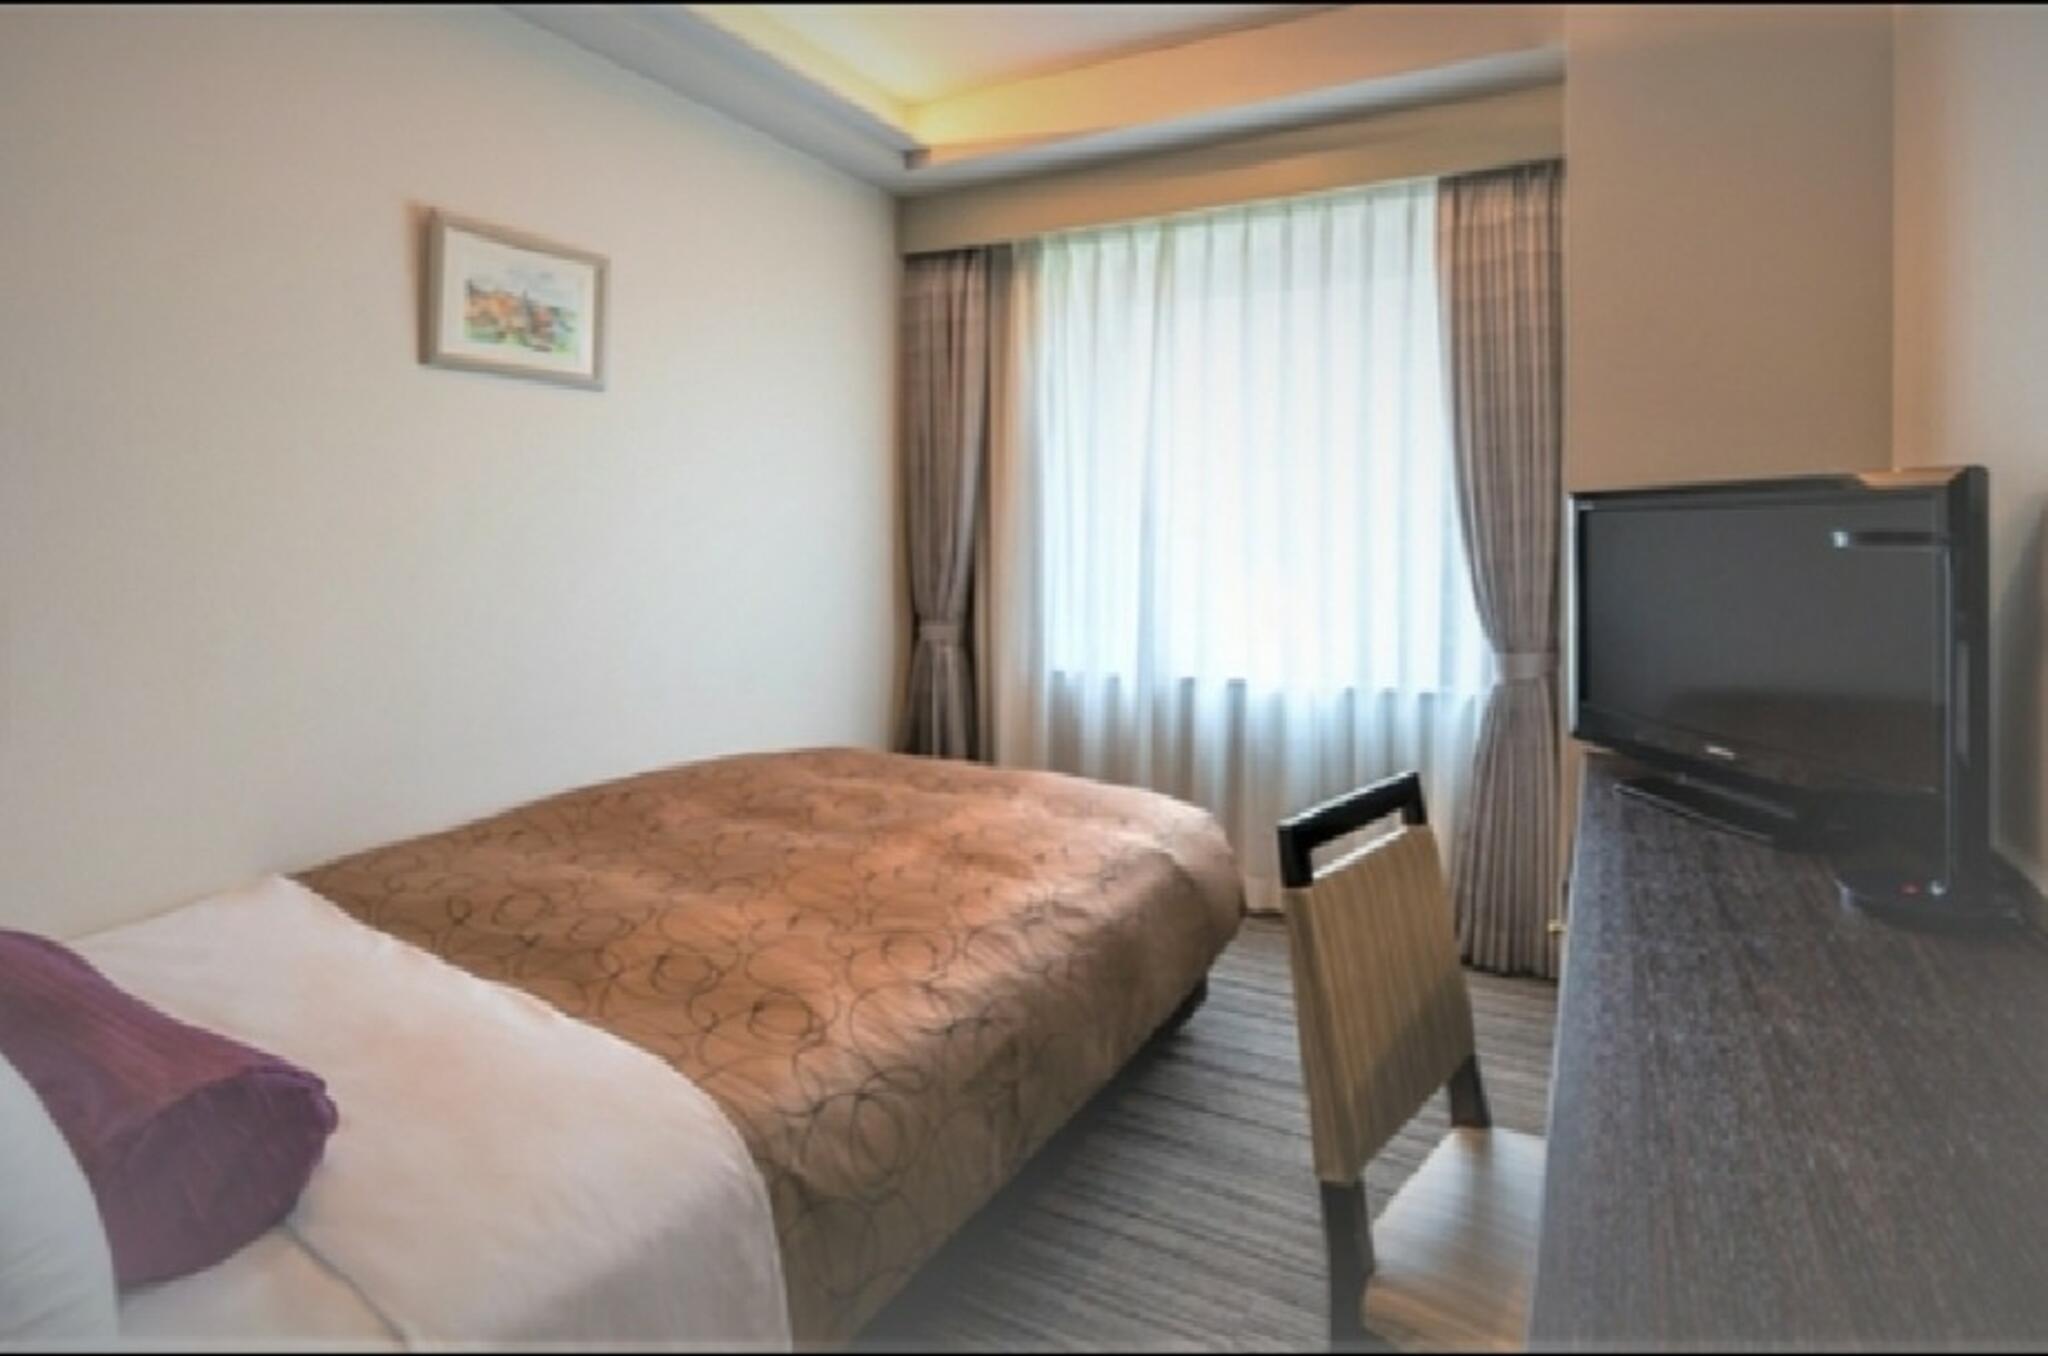 KKRホテル博多(国家公務員共済組合連合会福岡共済会館)の代表写真9